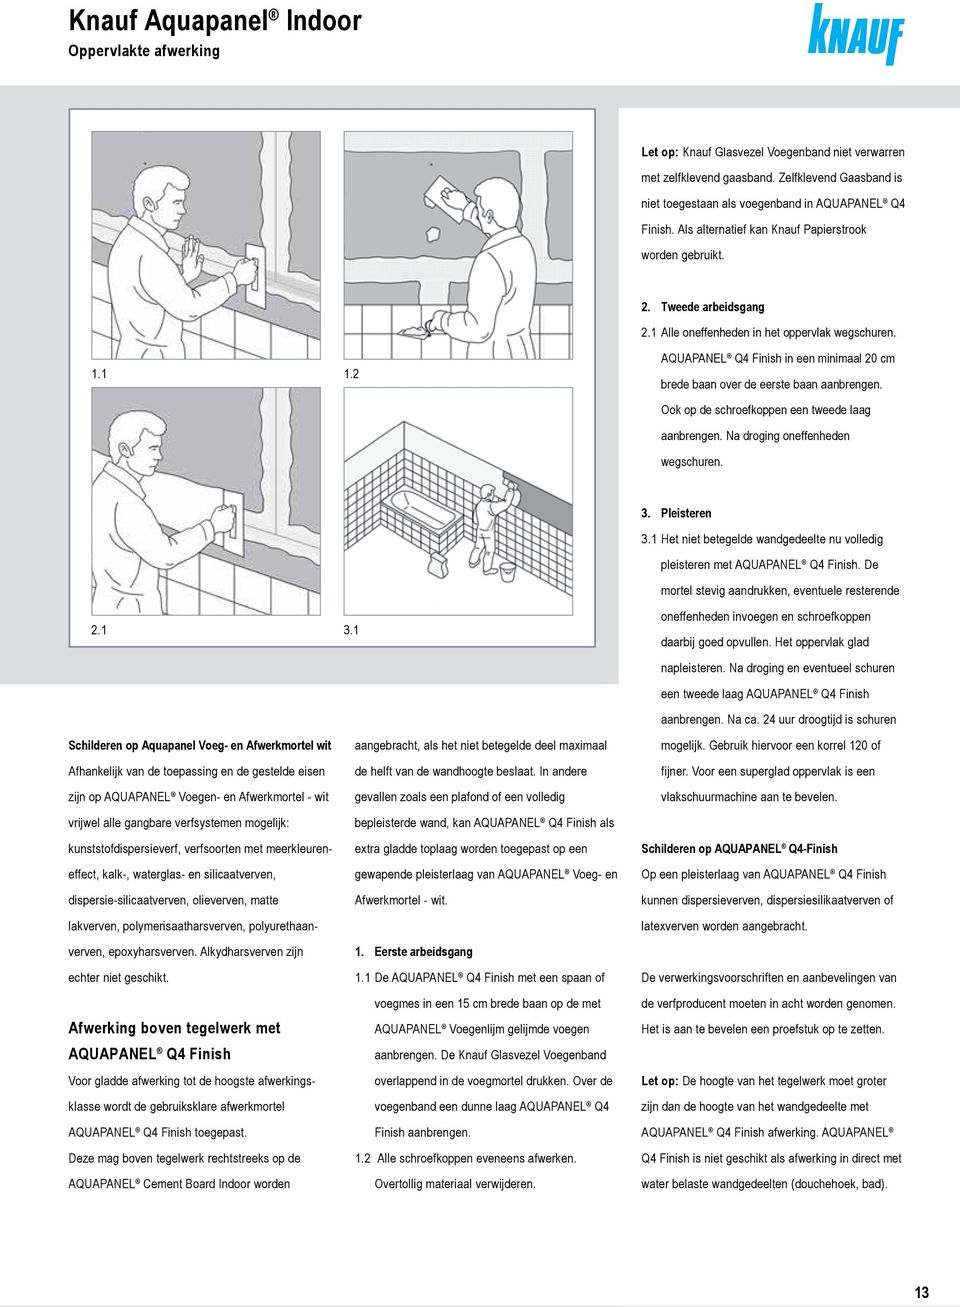 Aquapanel Cement Board Indoor - PDF Gratis download